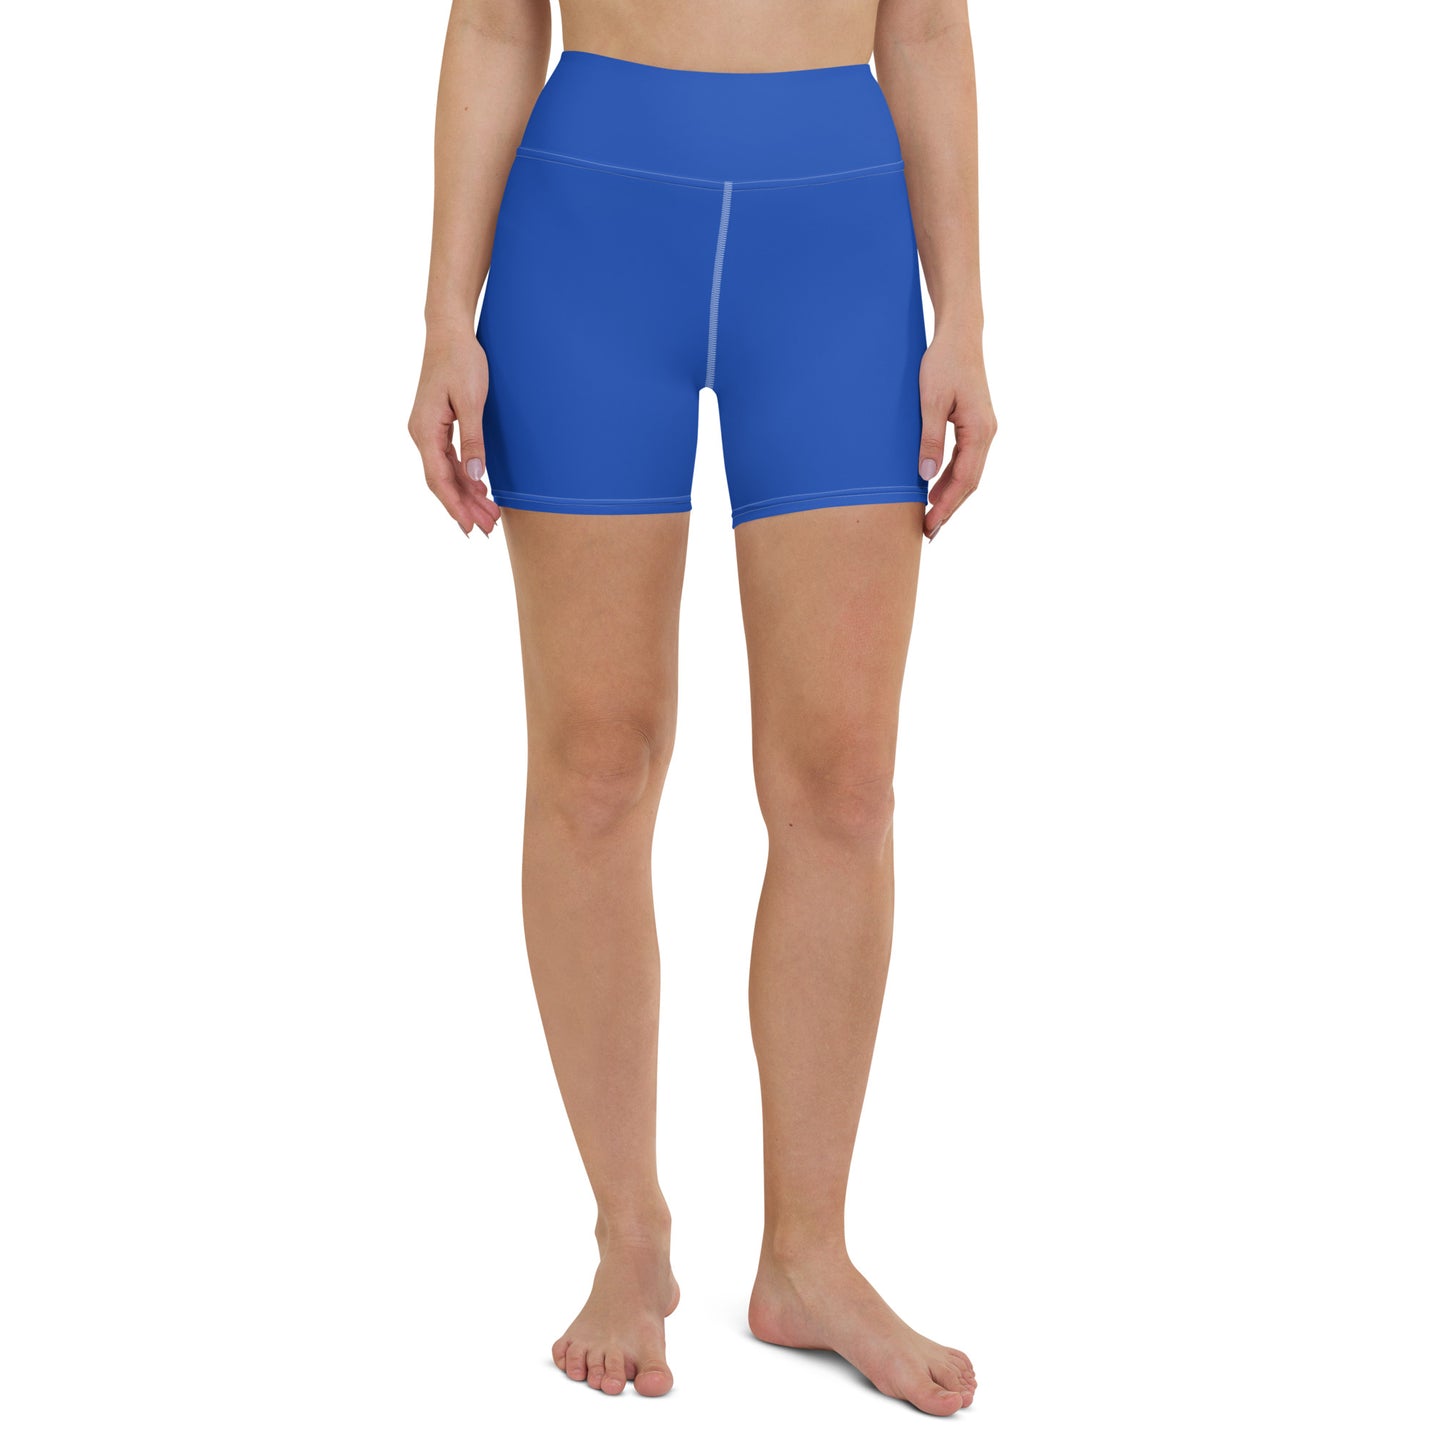 Borno Solid Blue High Waist Yoga Shorts / Bike Shorts with Inside Pocket